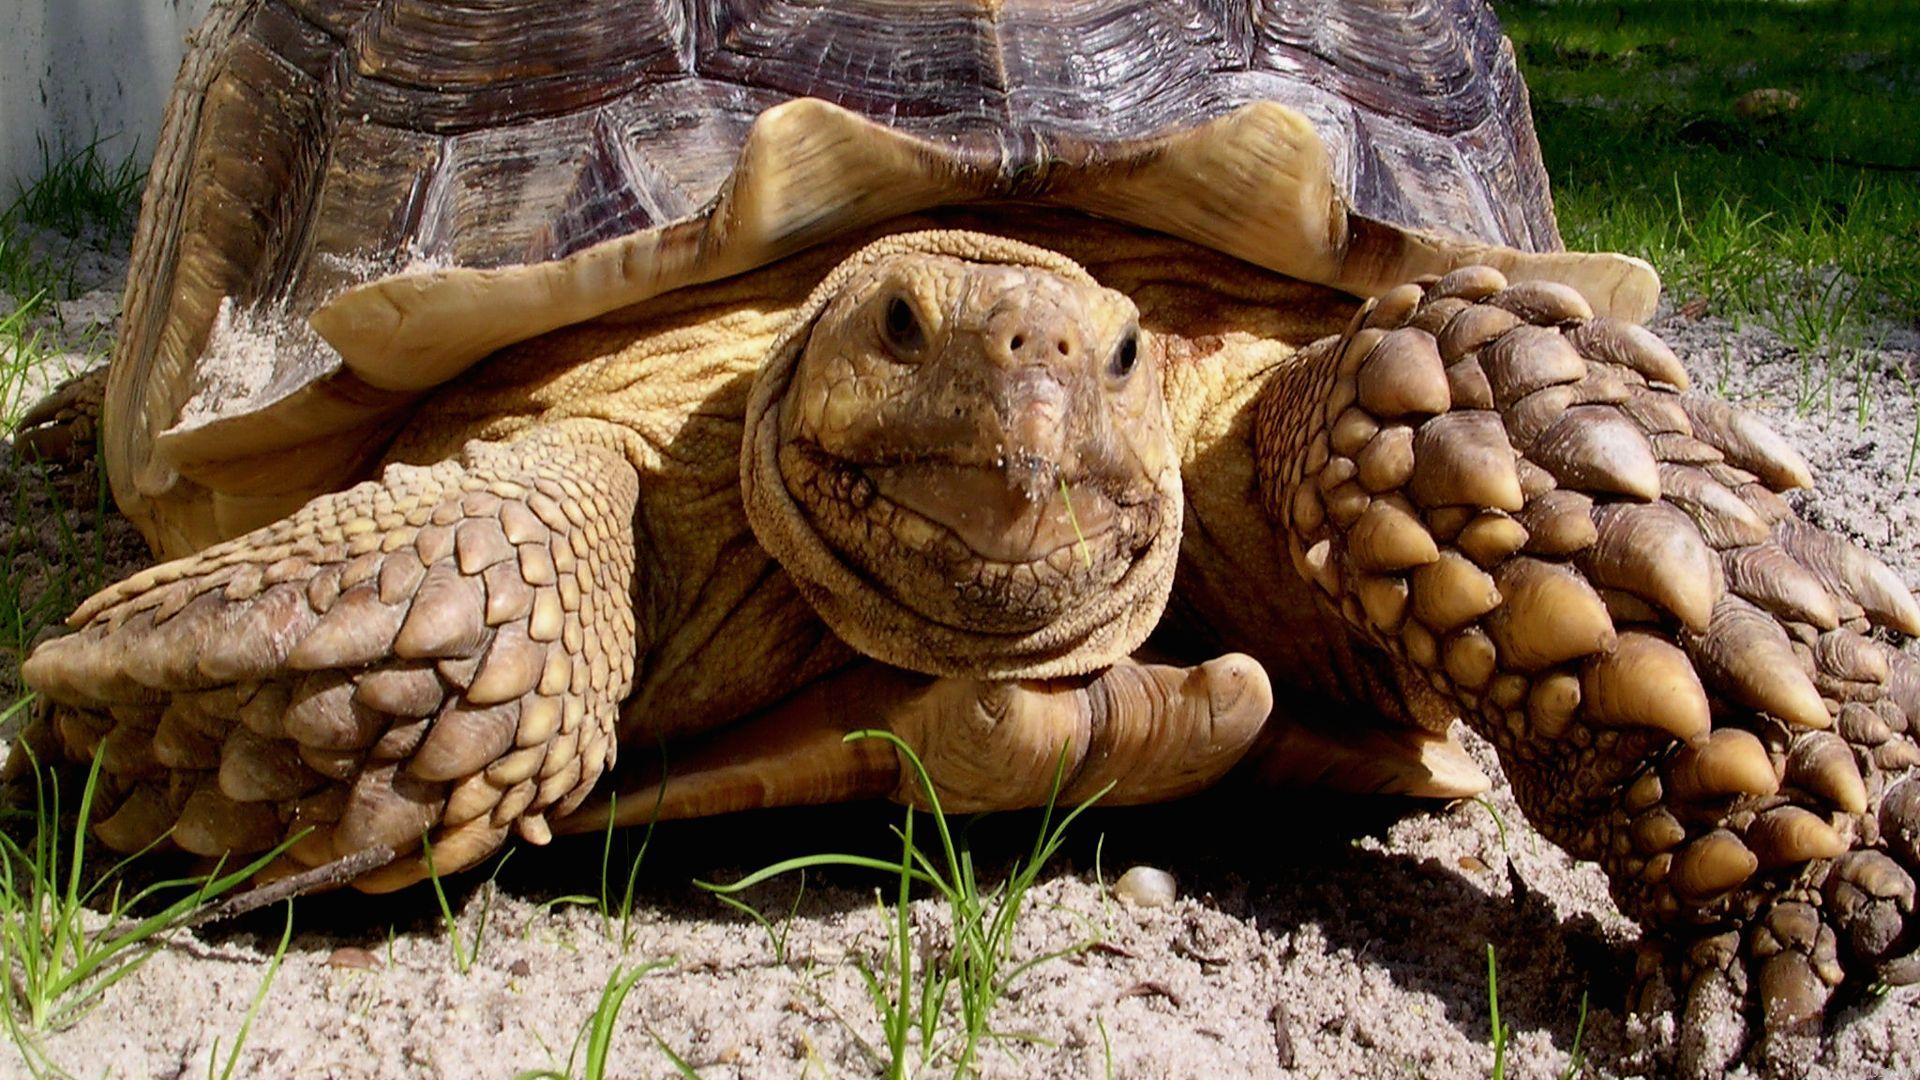 Cute Tortoise Image Baltana